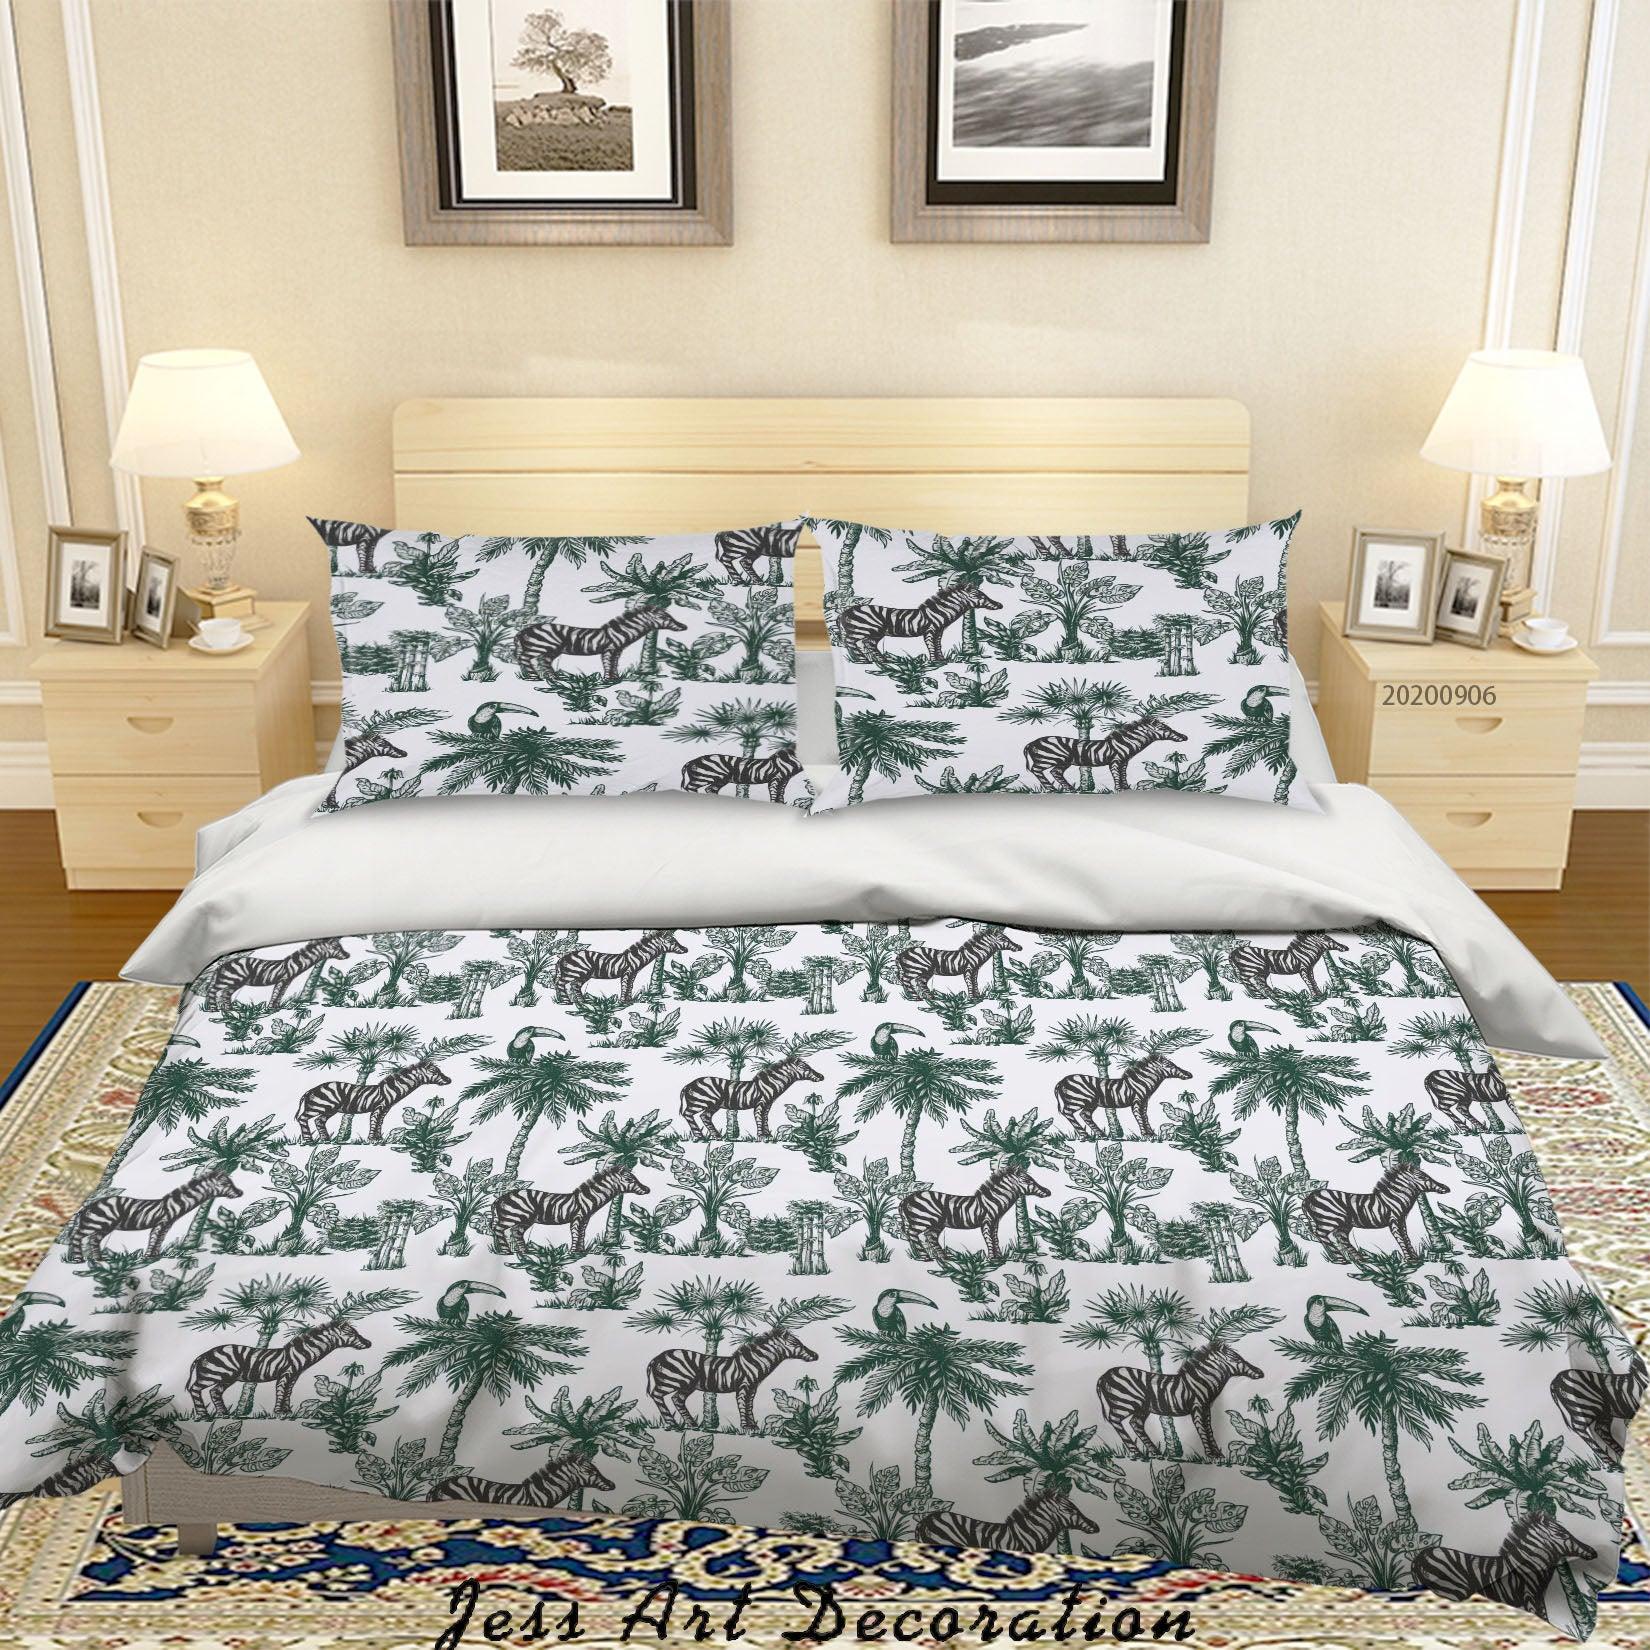 3D Vintage Leaves Zebra Pattern Quilt Cover Set Bedding Set Duvet Cover Pillowcases WJ 3659- Jess Art Decoration